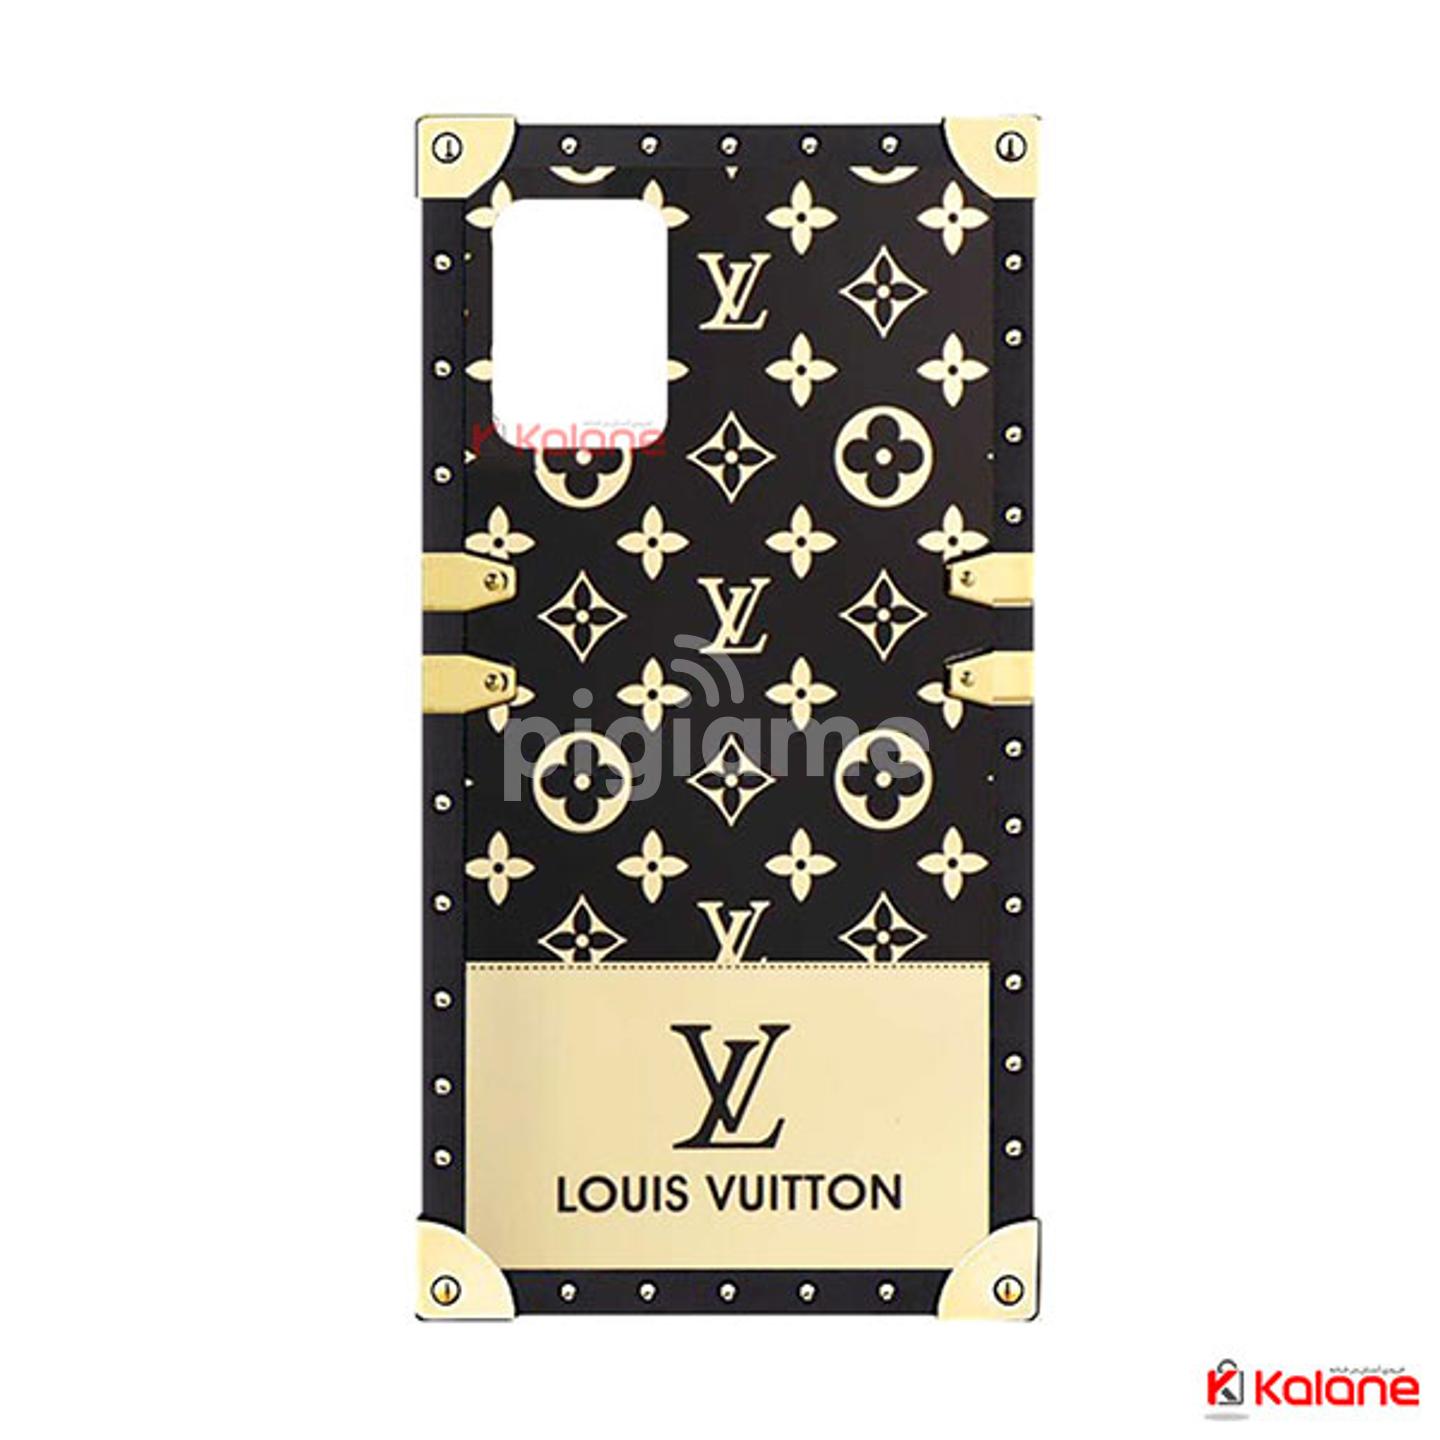 LV Louis Vuitton Samsung Galaxy S9+ Case / Cover in Nairobi